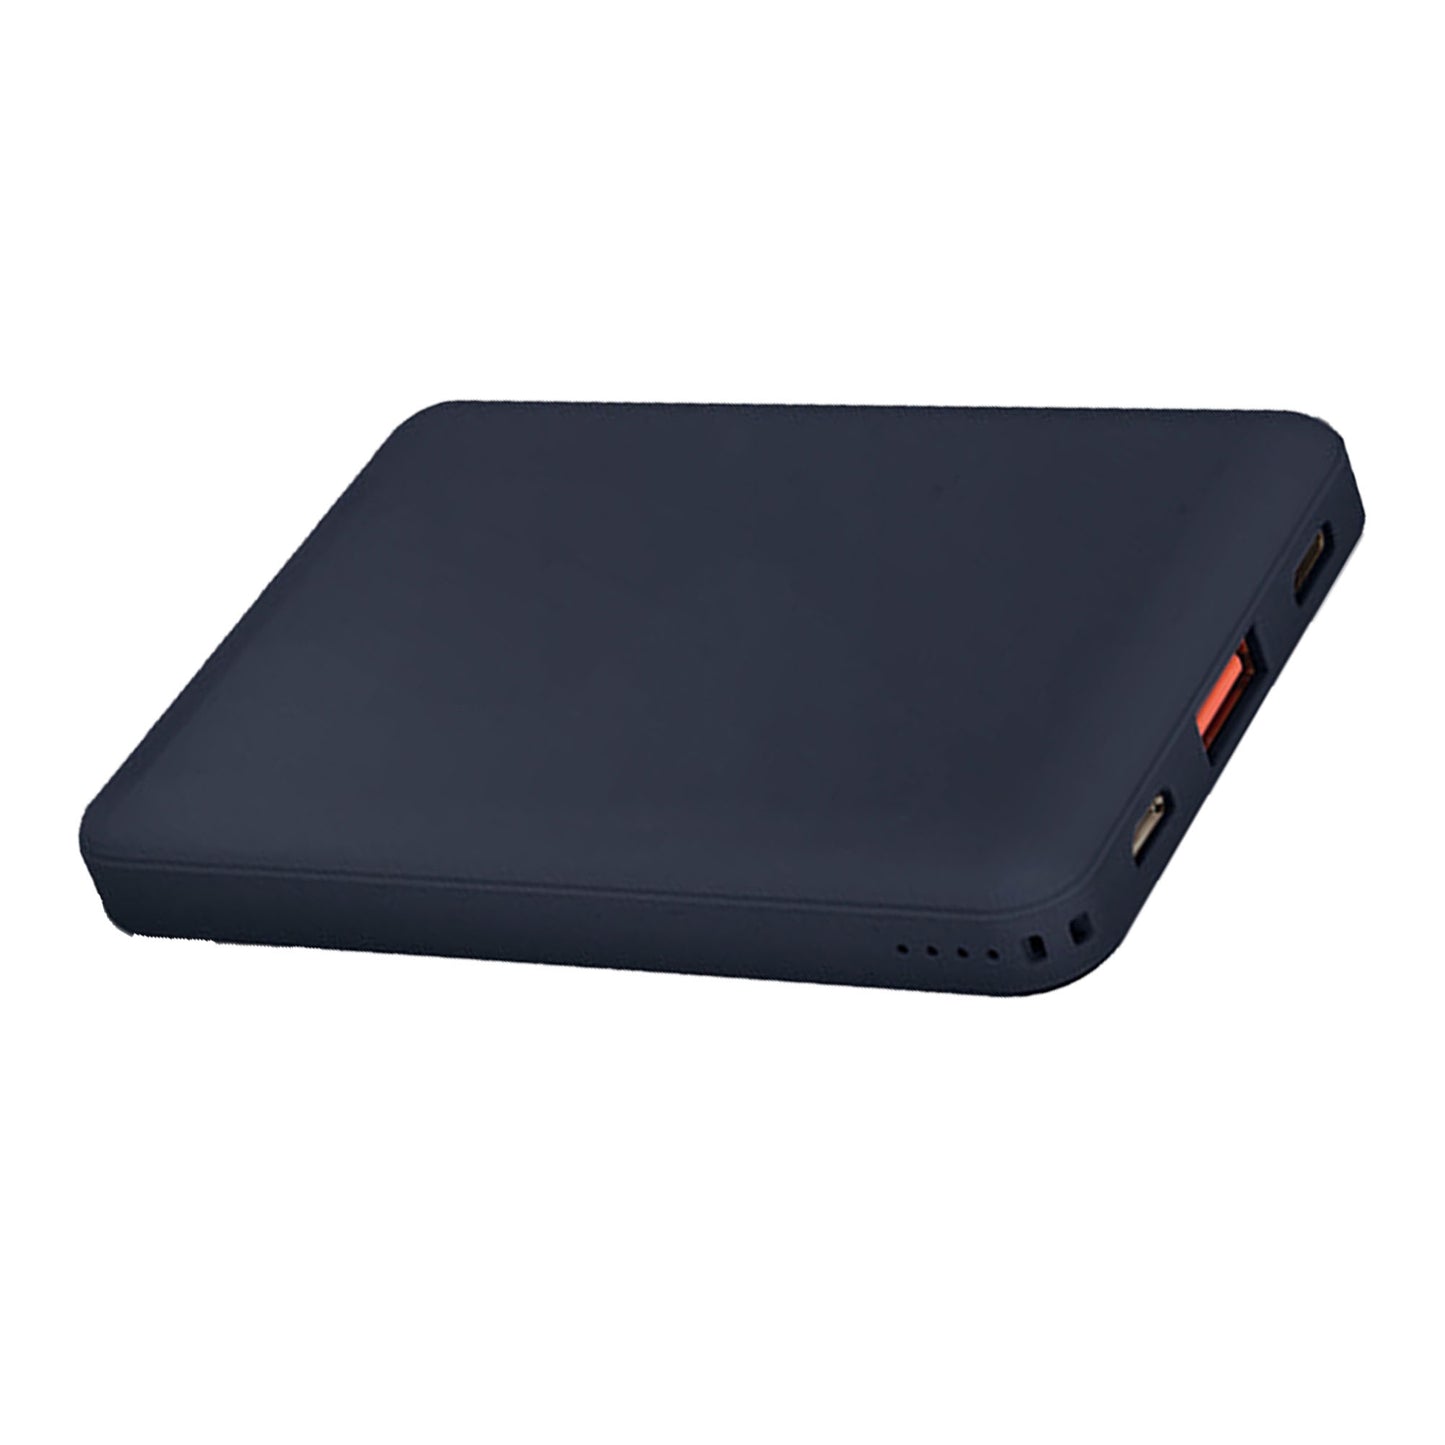 Uniq Fuele Mini PocketSlim 8000 mAh USB-C 18W PD Power Bank - Lavender (Barcode: 8886463676363 )